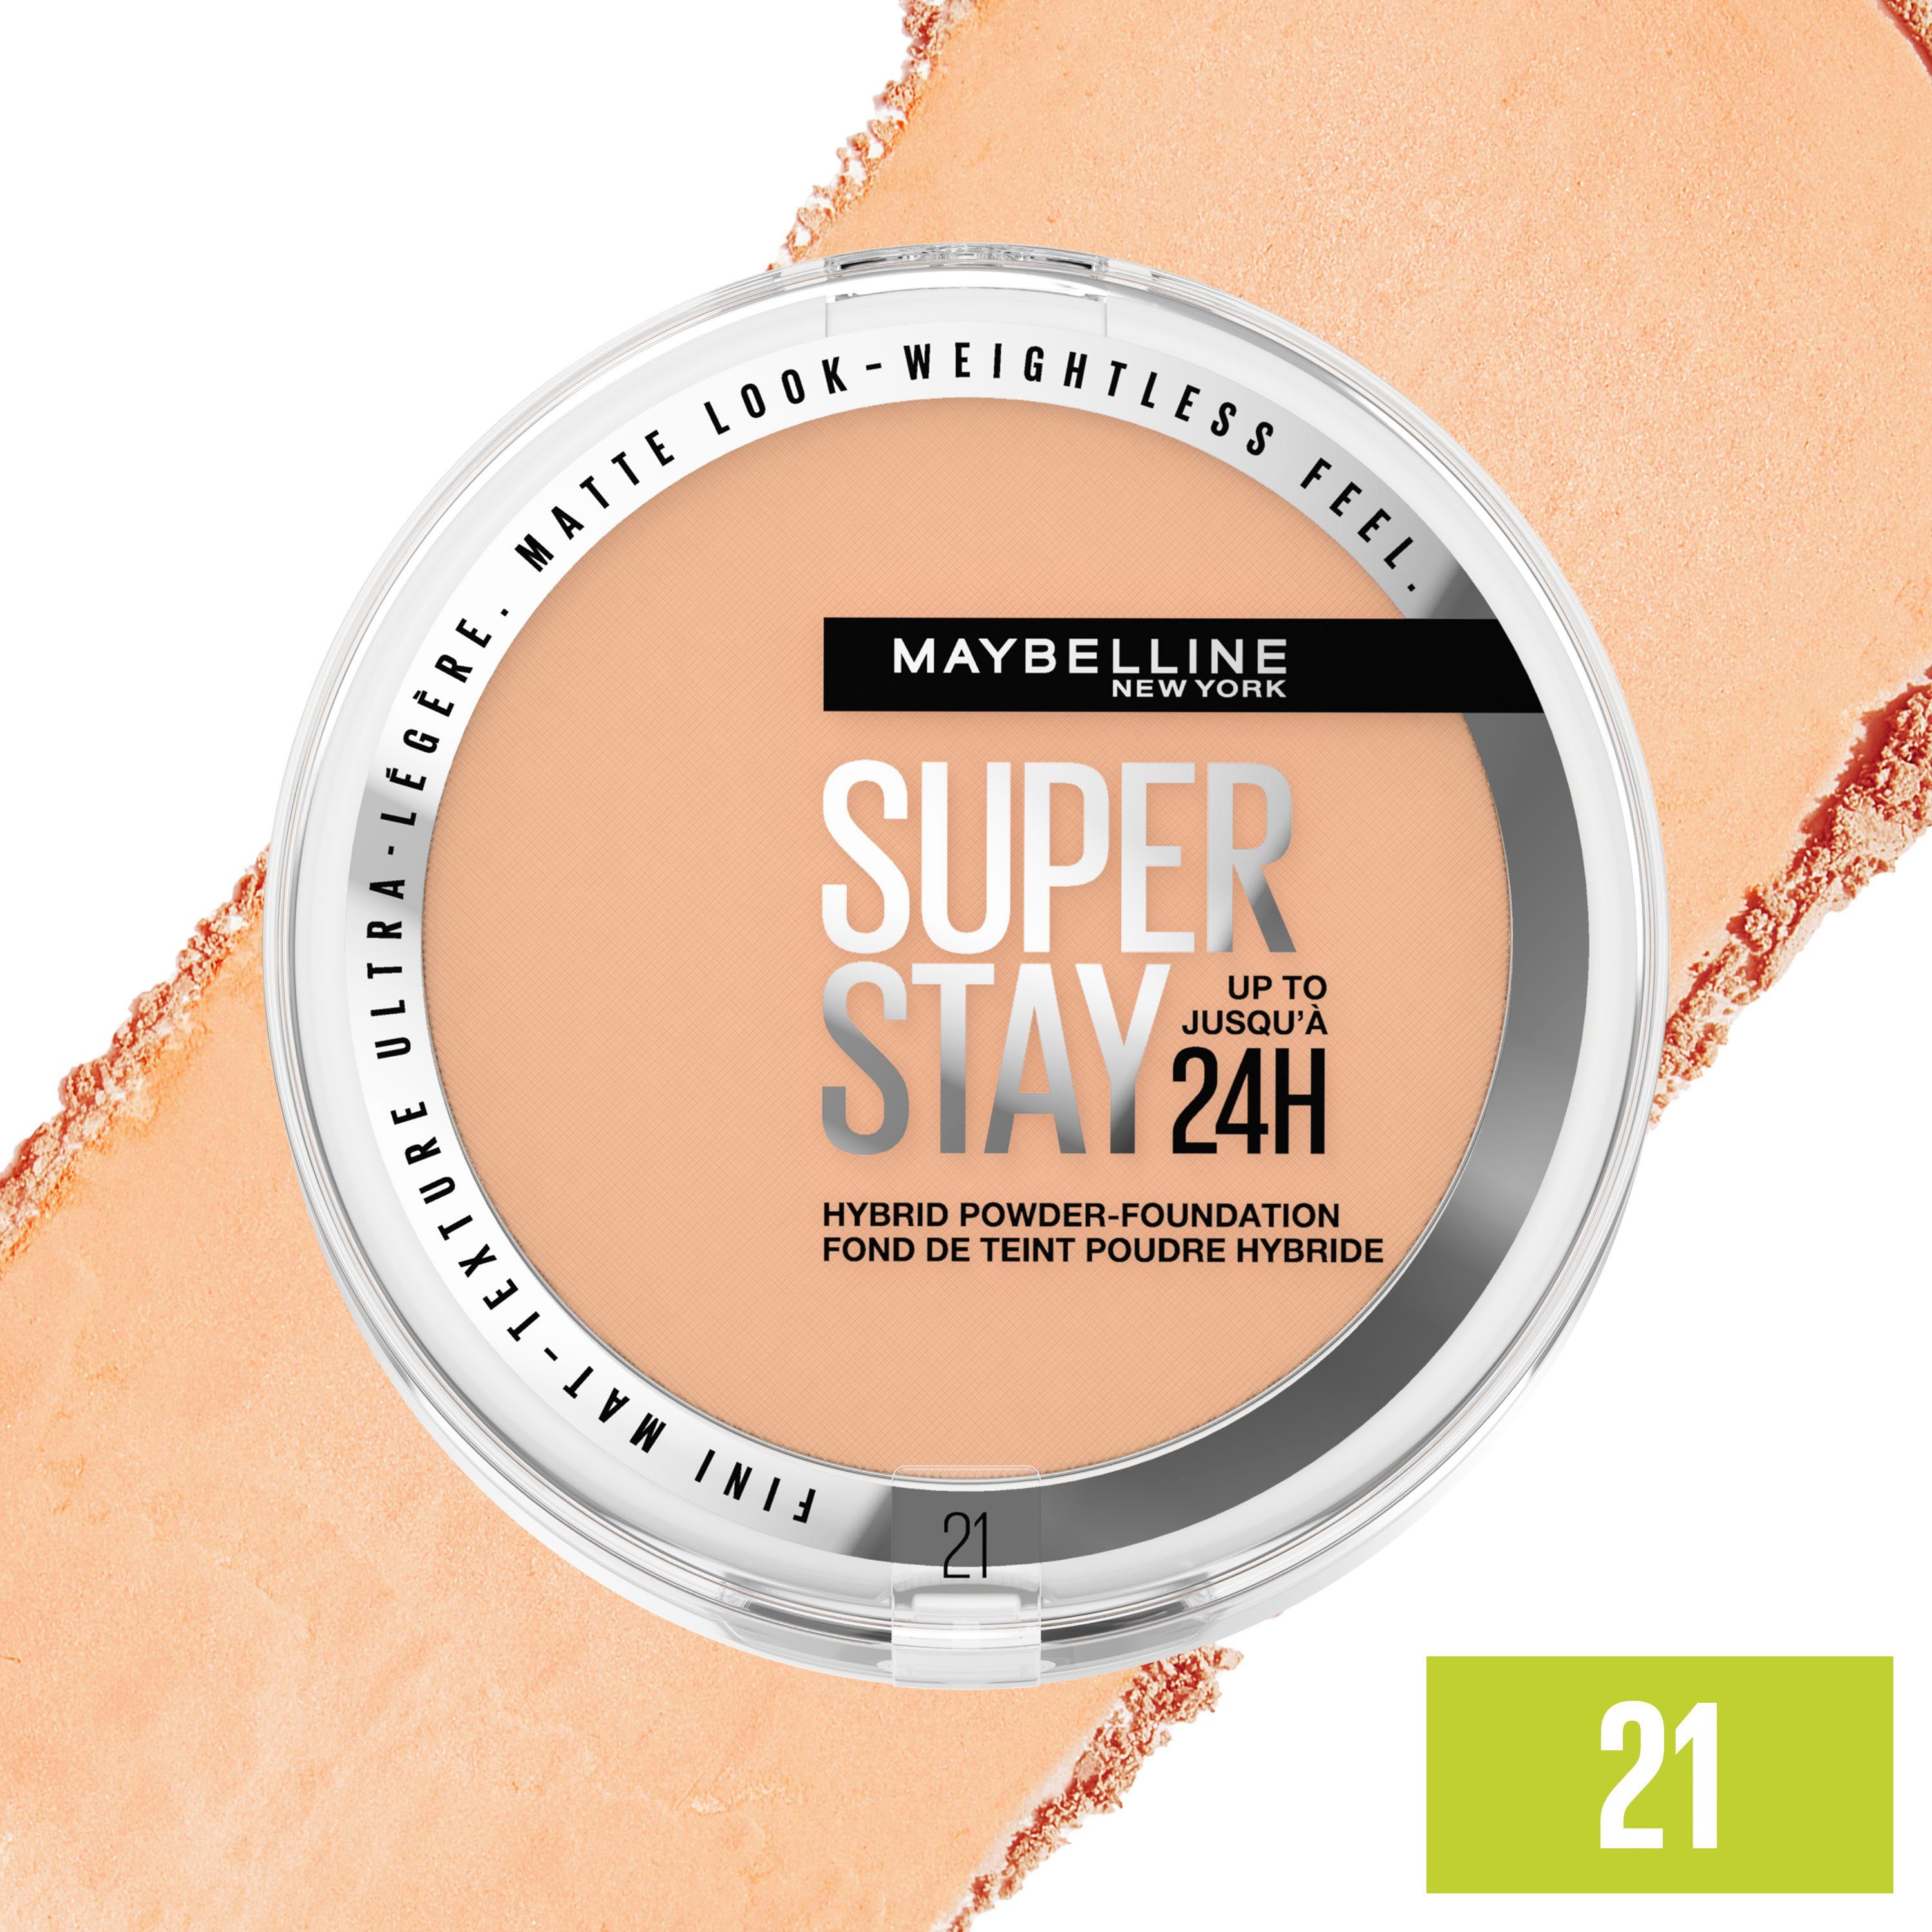 Hybrides MAYBELLINE Stay NEW New Super YORK York Foundation Maybelline Make-Up Puder